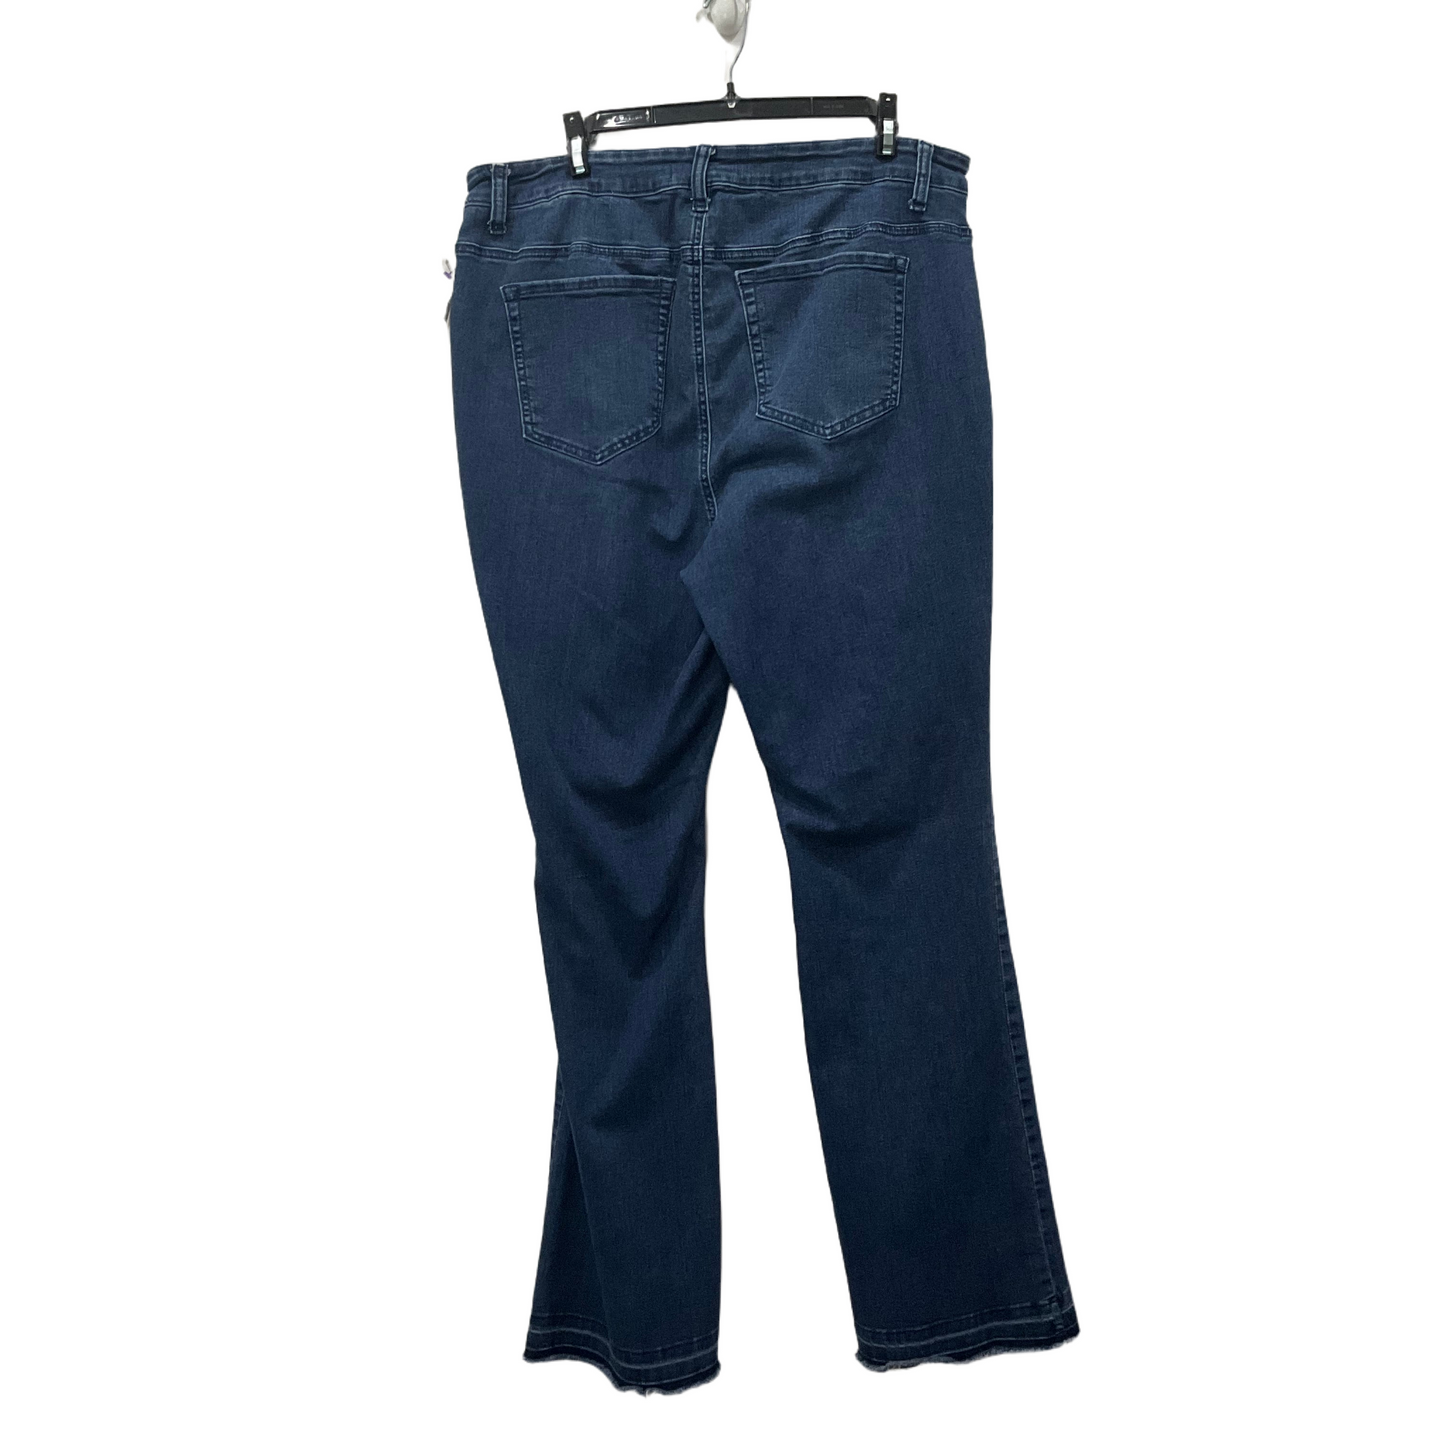 Blue Denim Jeans Boot Cut Arula, Size 16